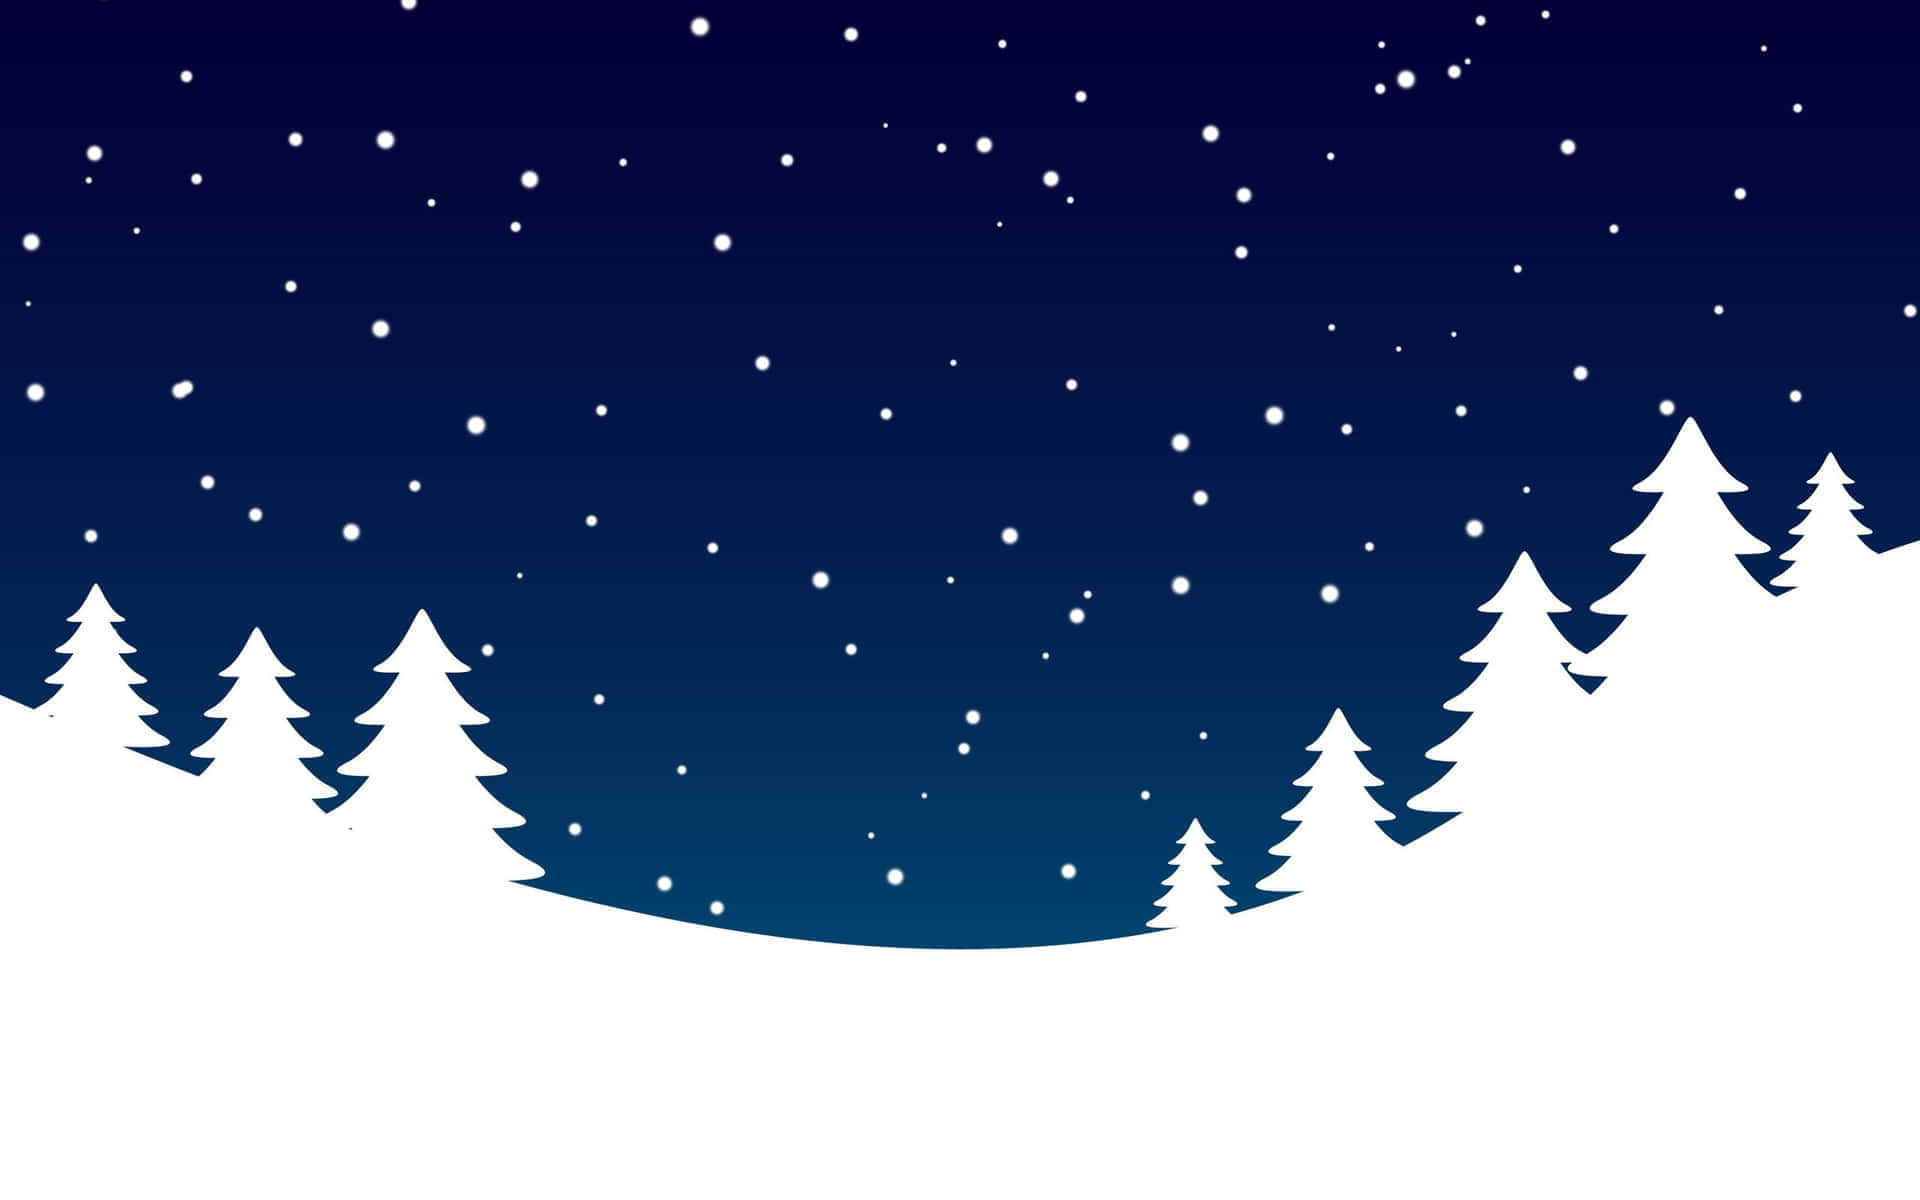 Minimalist Winter Nightscape Wallpaper